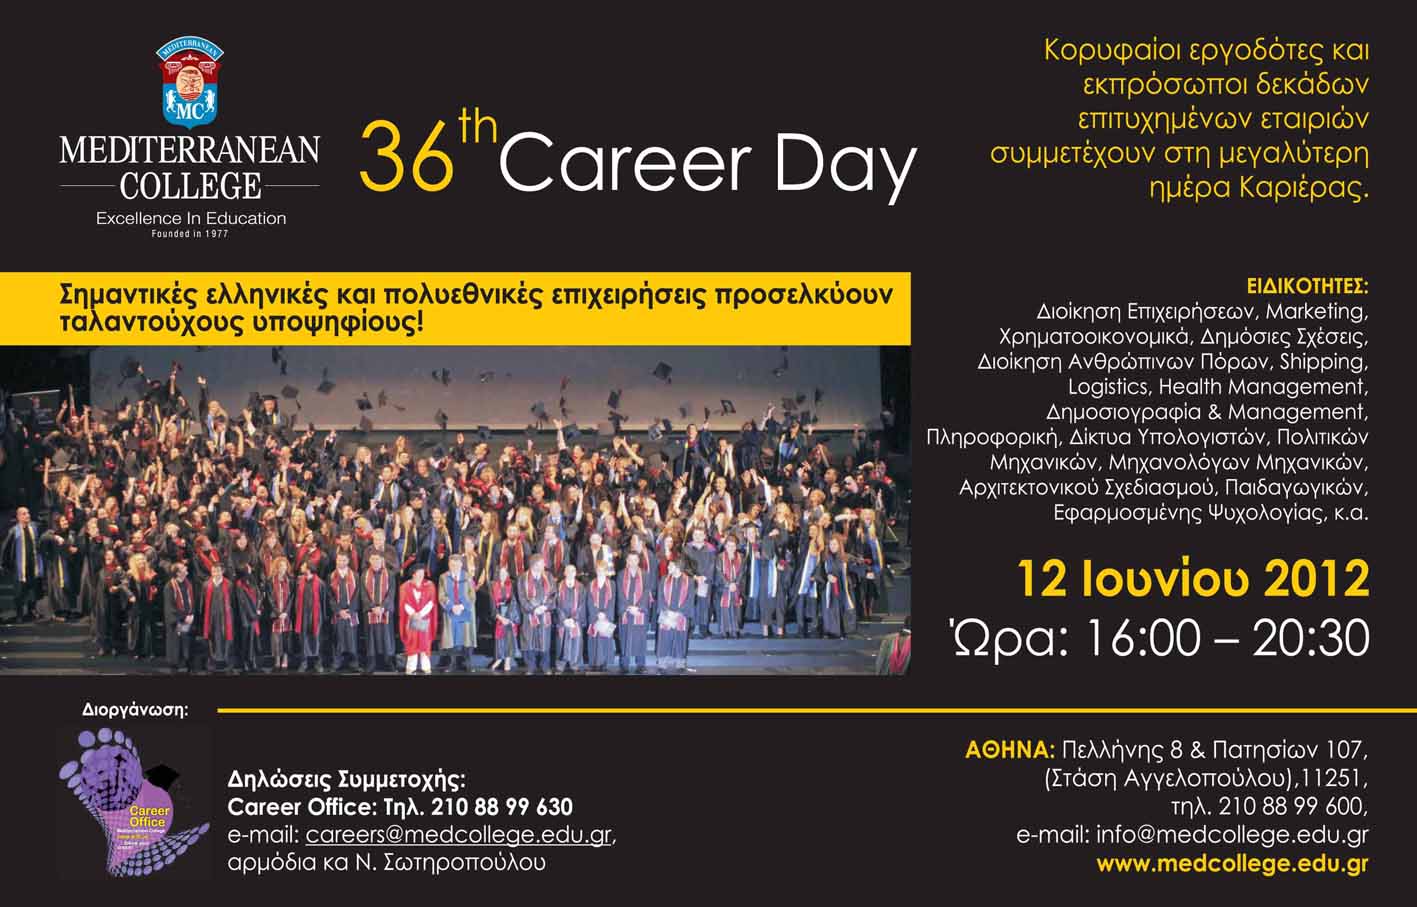 Mediterranean College 36th Career Day: Σημαντικές ελληνικές και πολυεθνικές επιχειρήσεις προσελκύουν ταλαντούχους υποψηφίους!